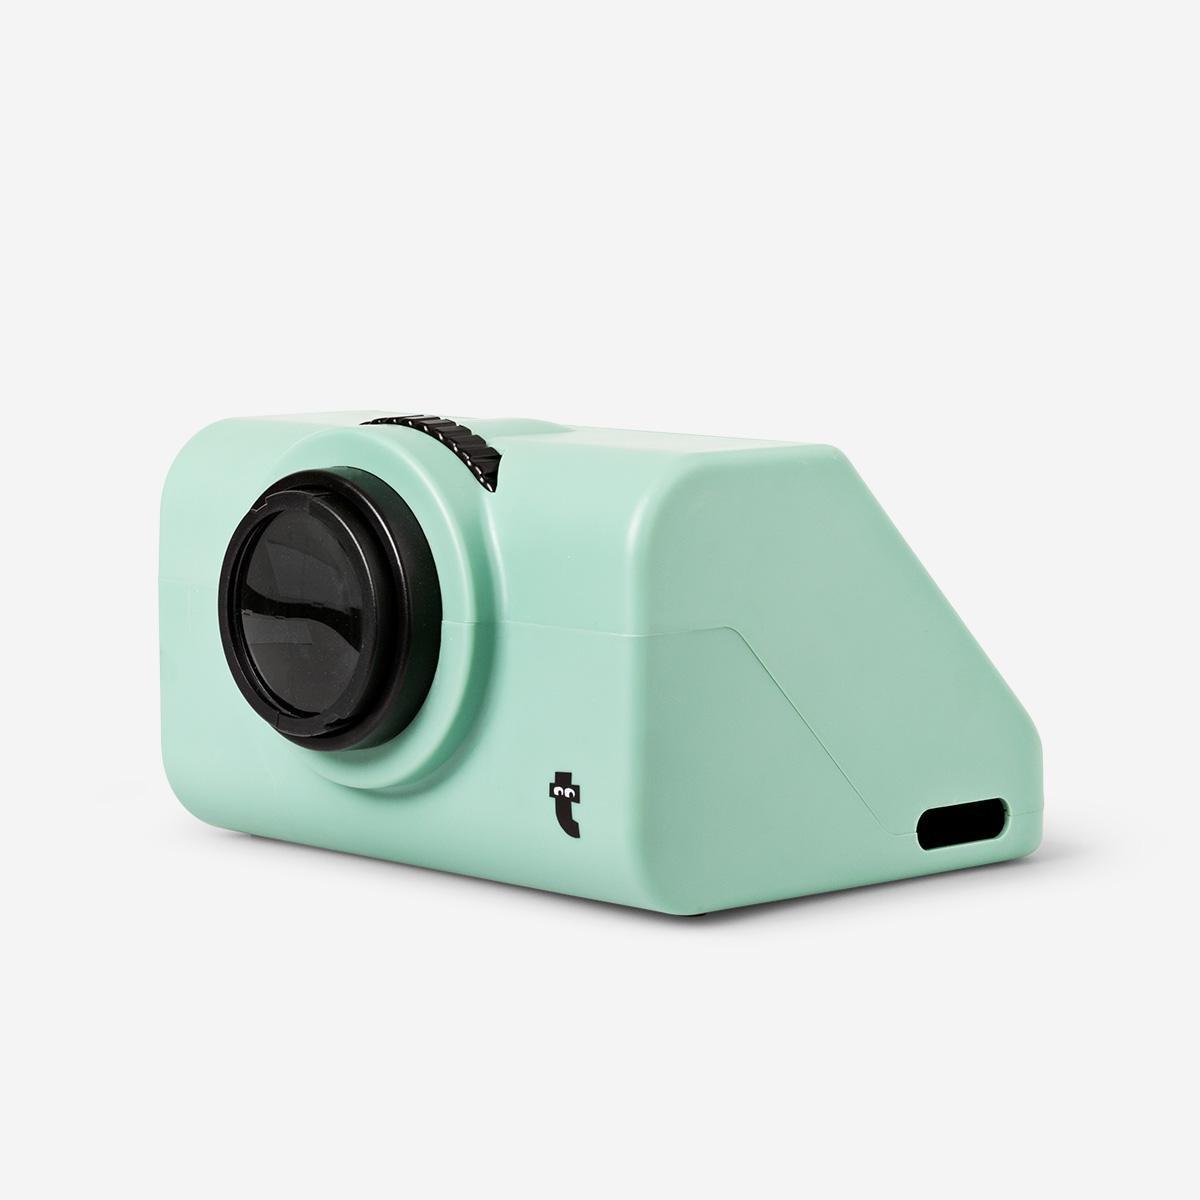 Green smartphone projector